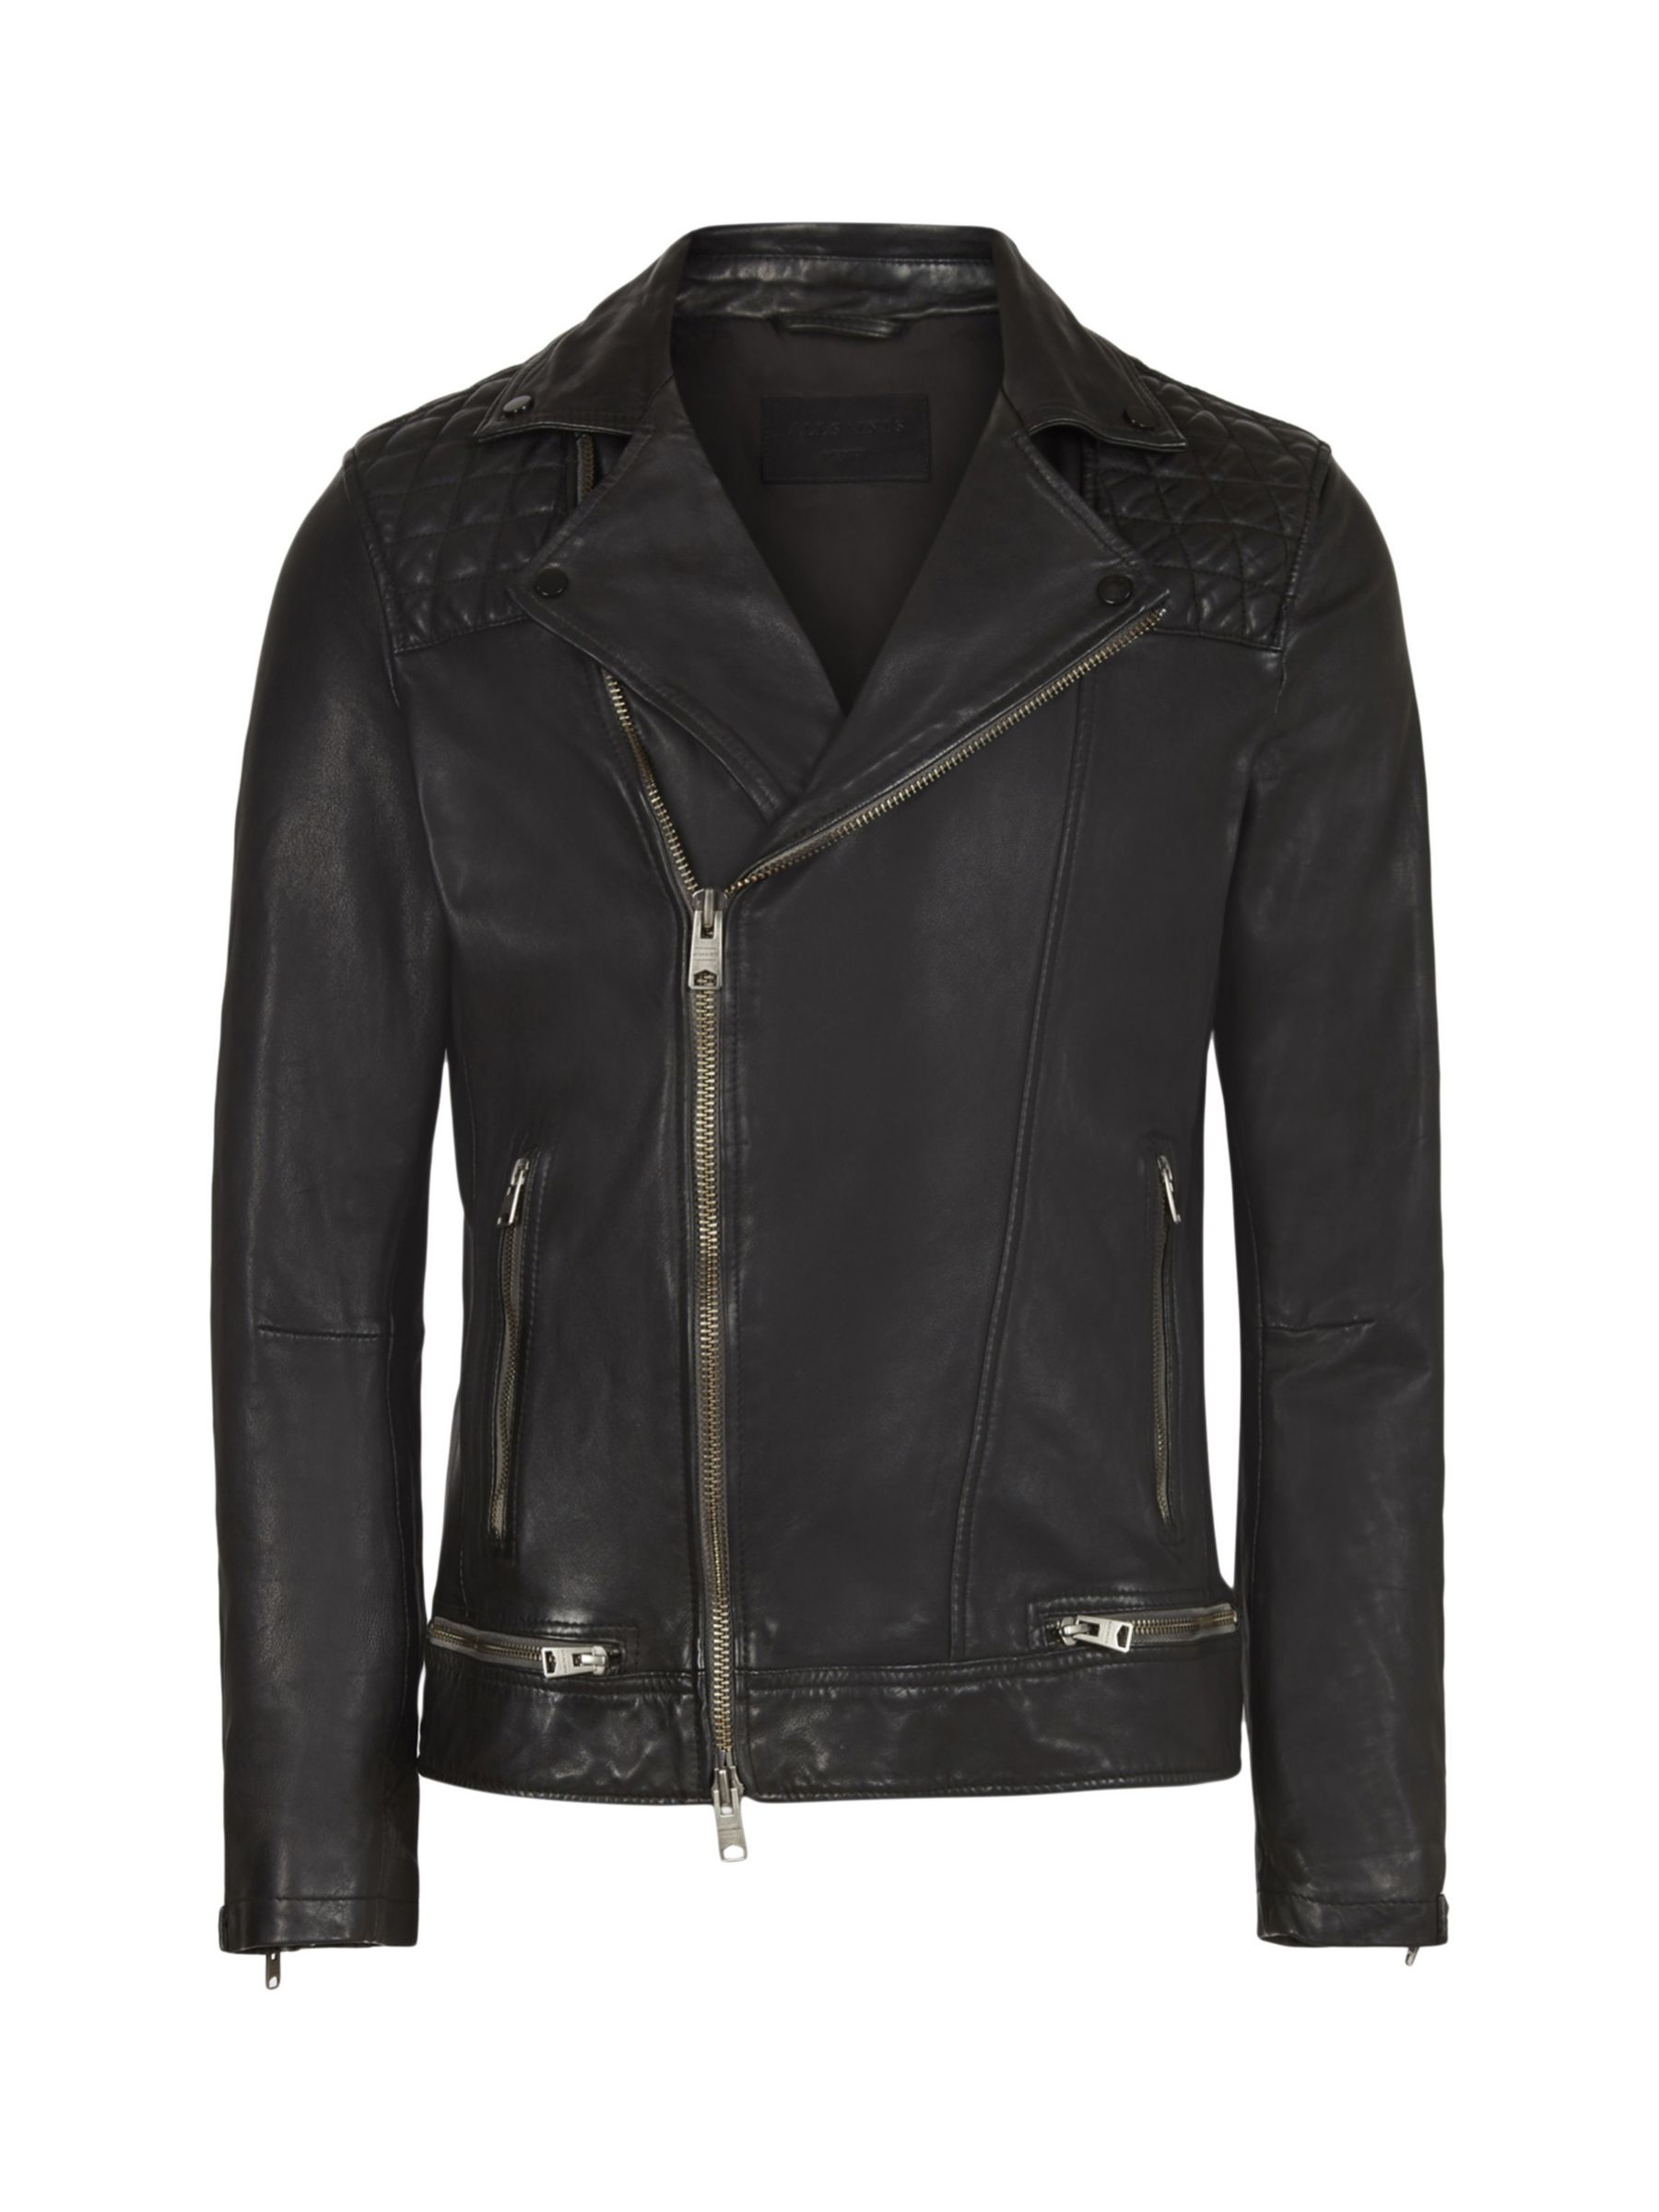 AllSaints Conroy Leather Biker Jacket, Black, L